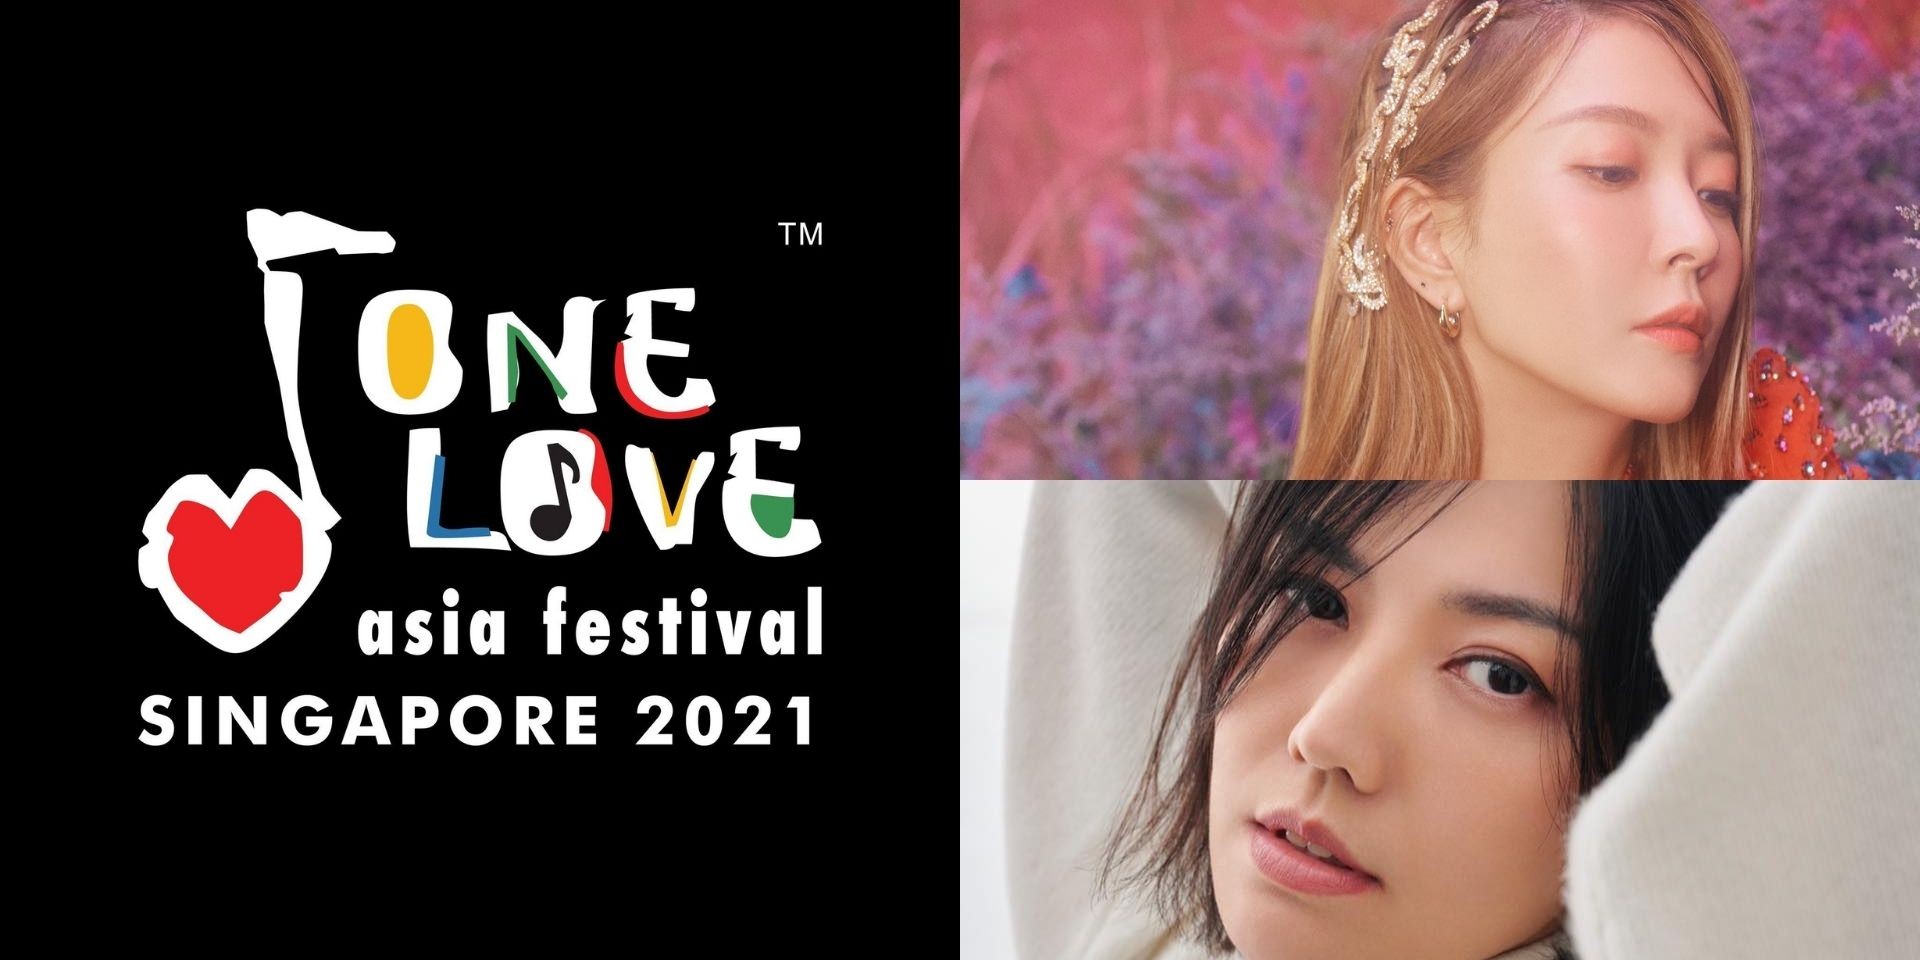 One Love Asia Festival 21 Featuring Stefanie Sun And Boa Announces